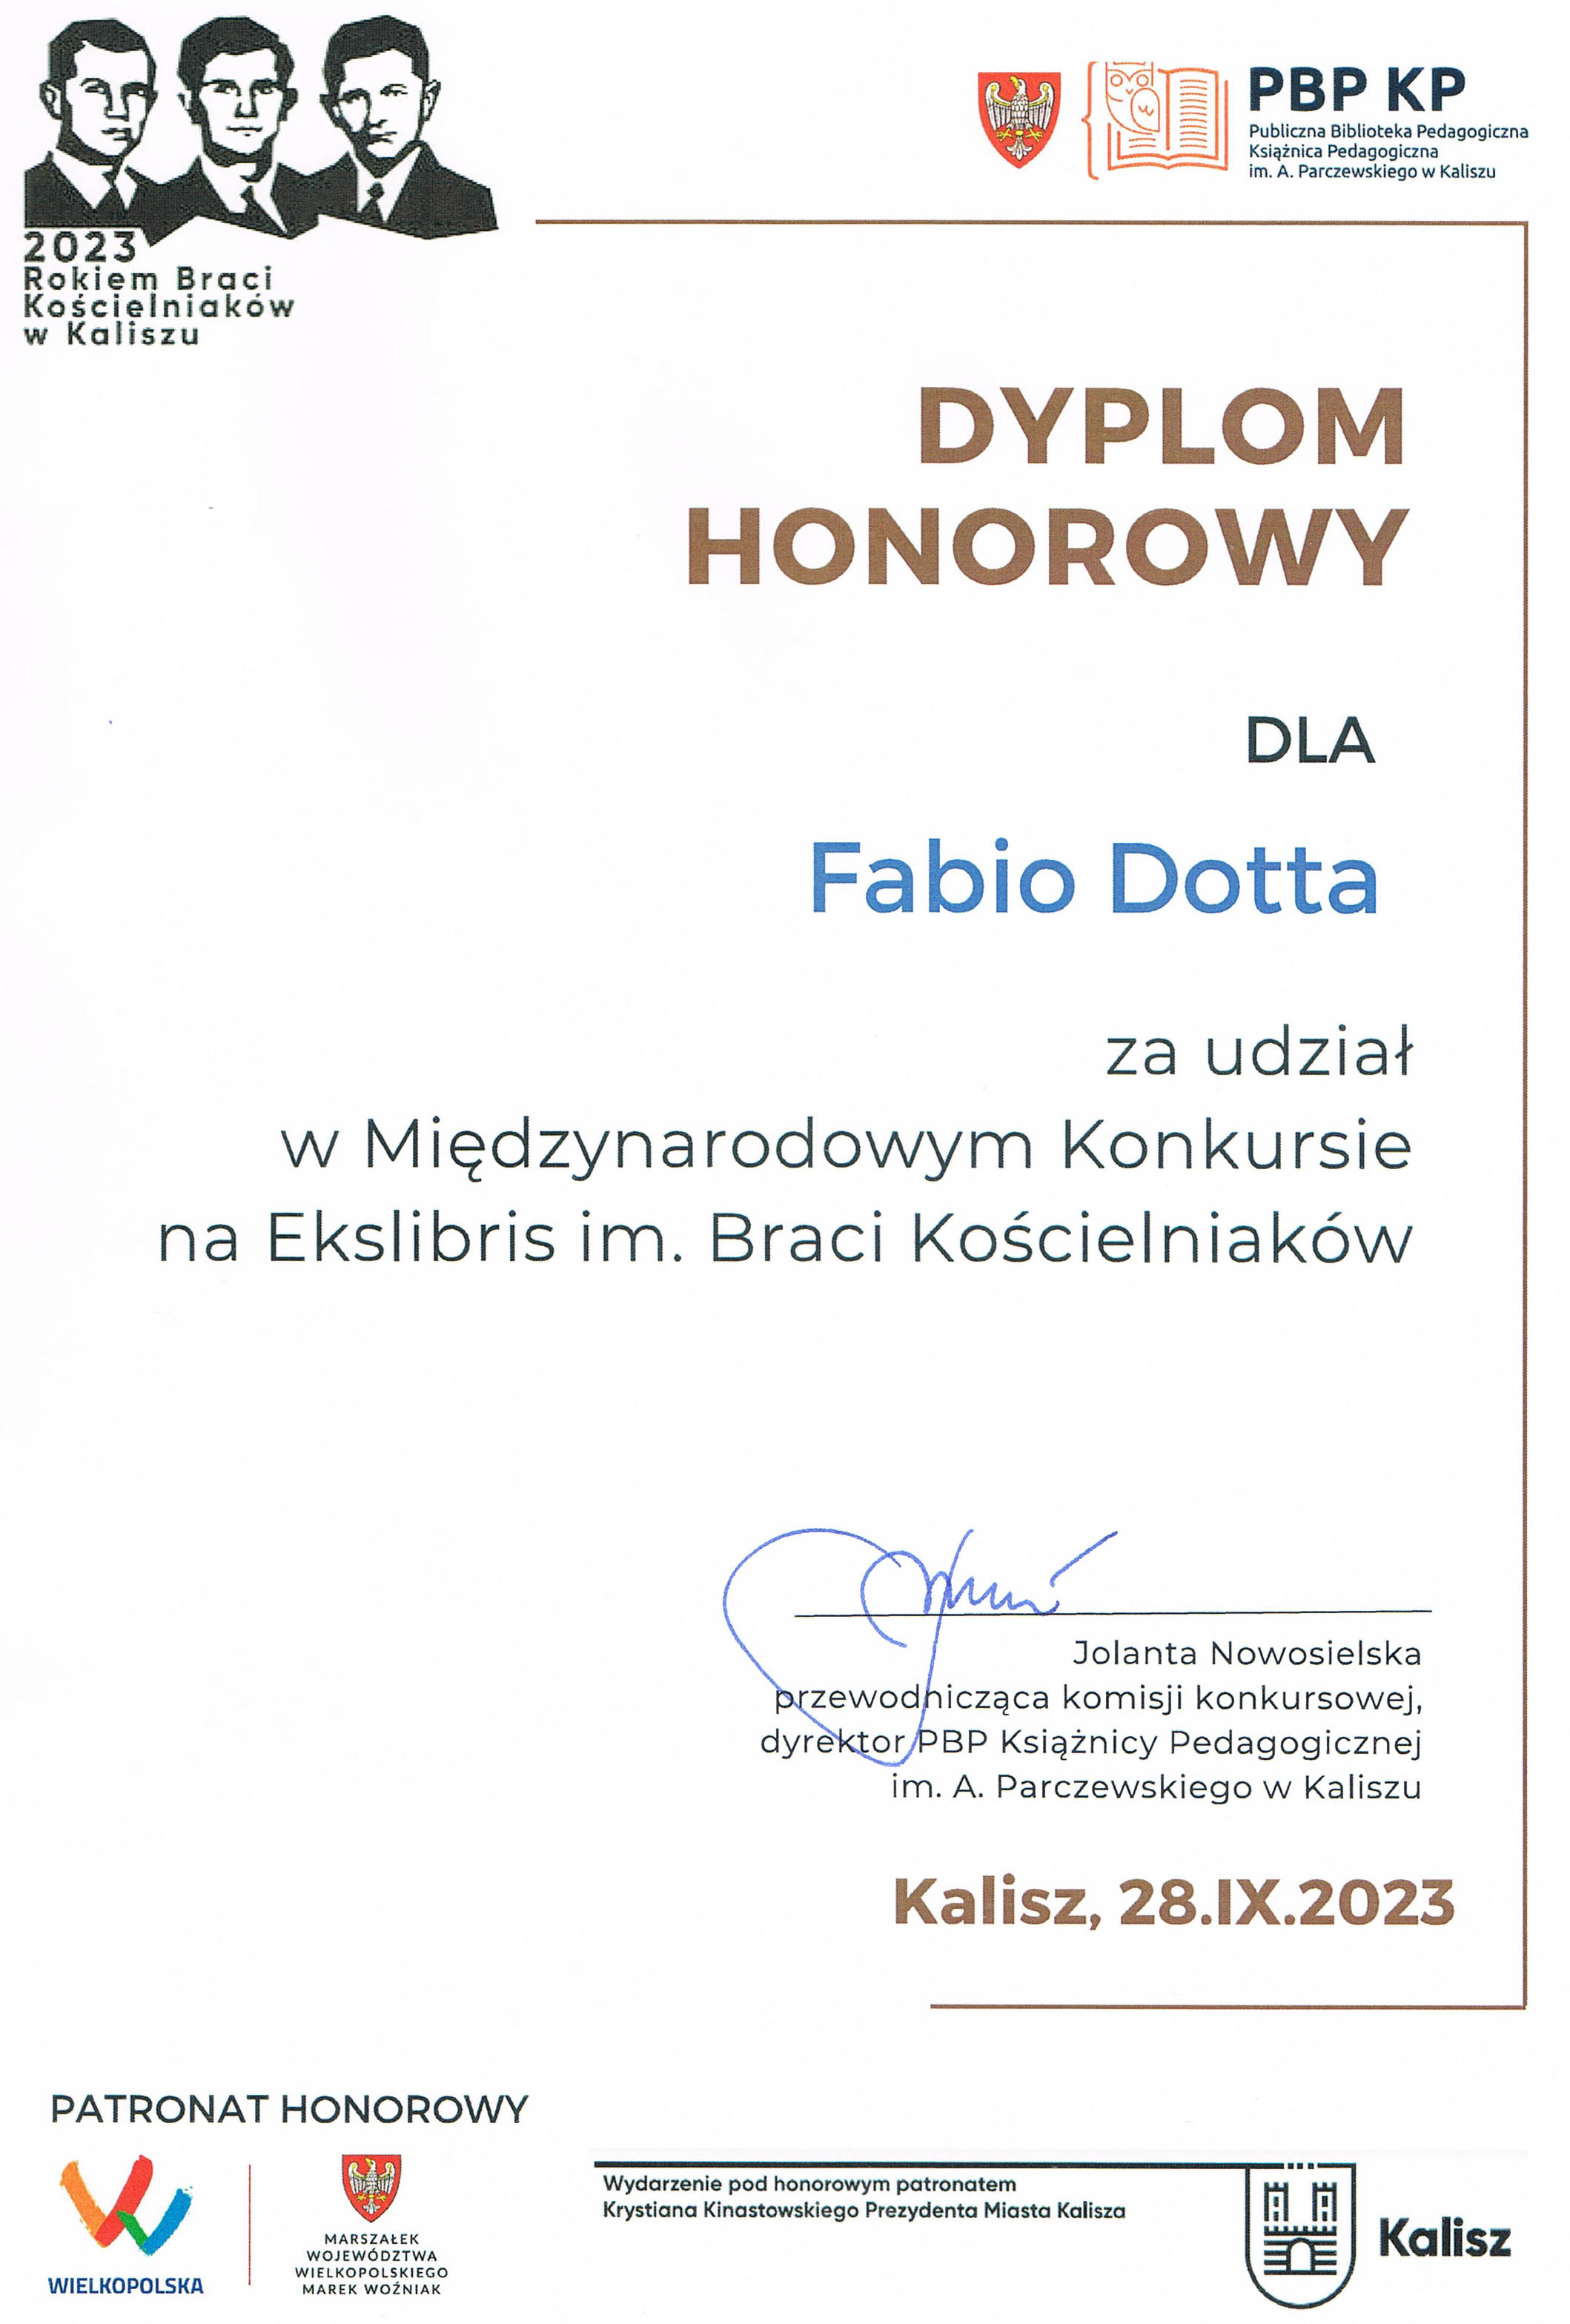 2023_Diploma di onore KALISZ Polonia 28_09_2023 Fabio Dotta_ALL